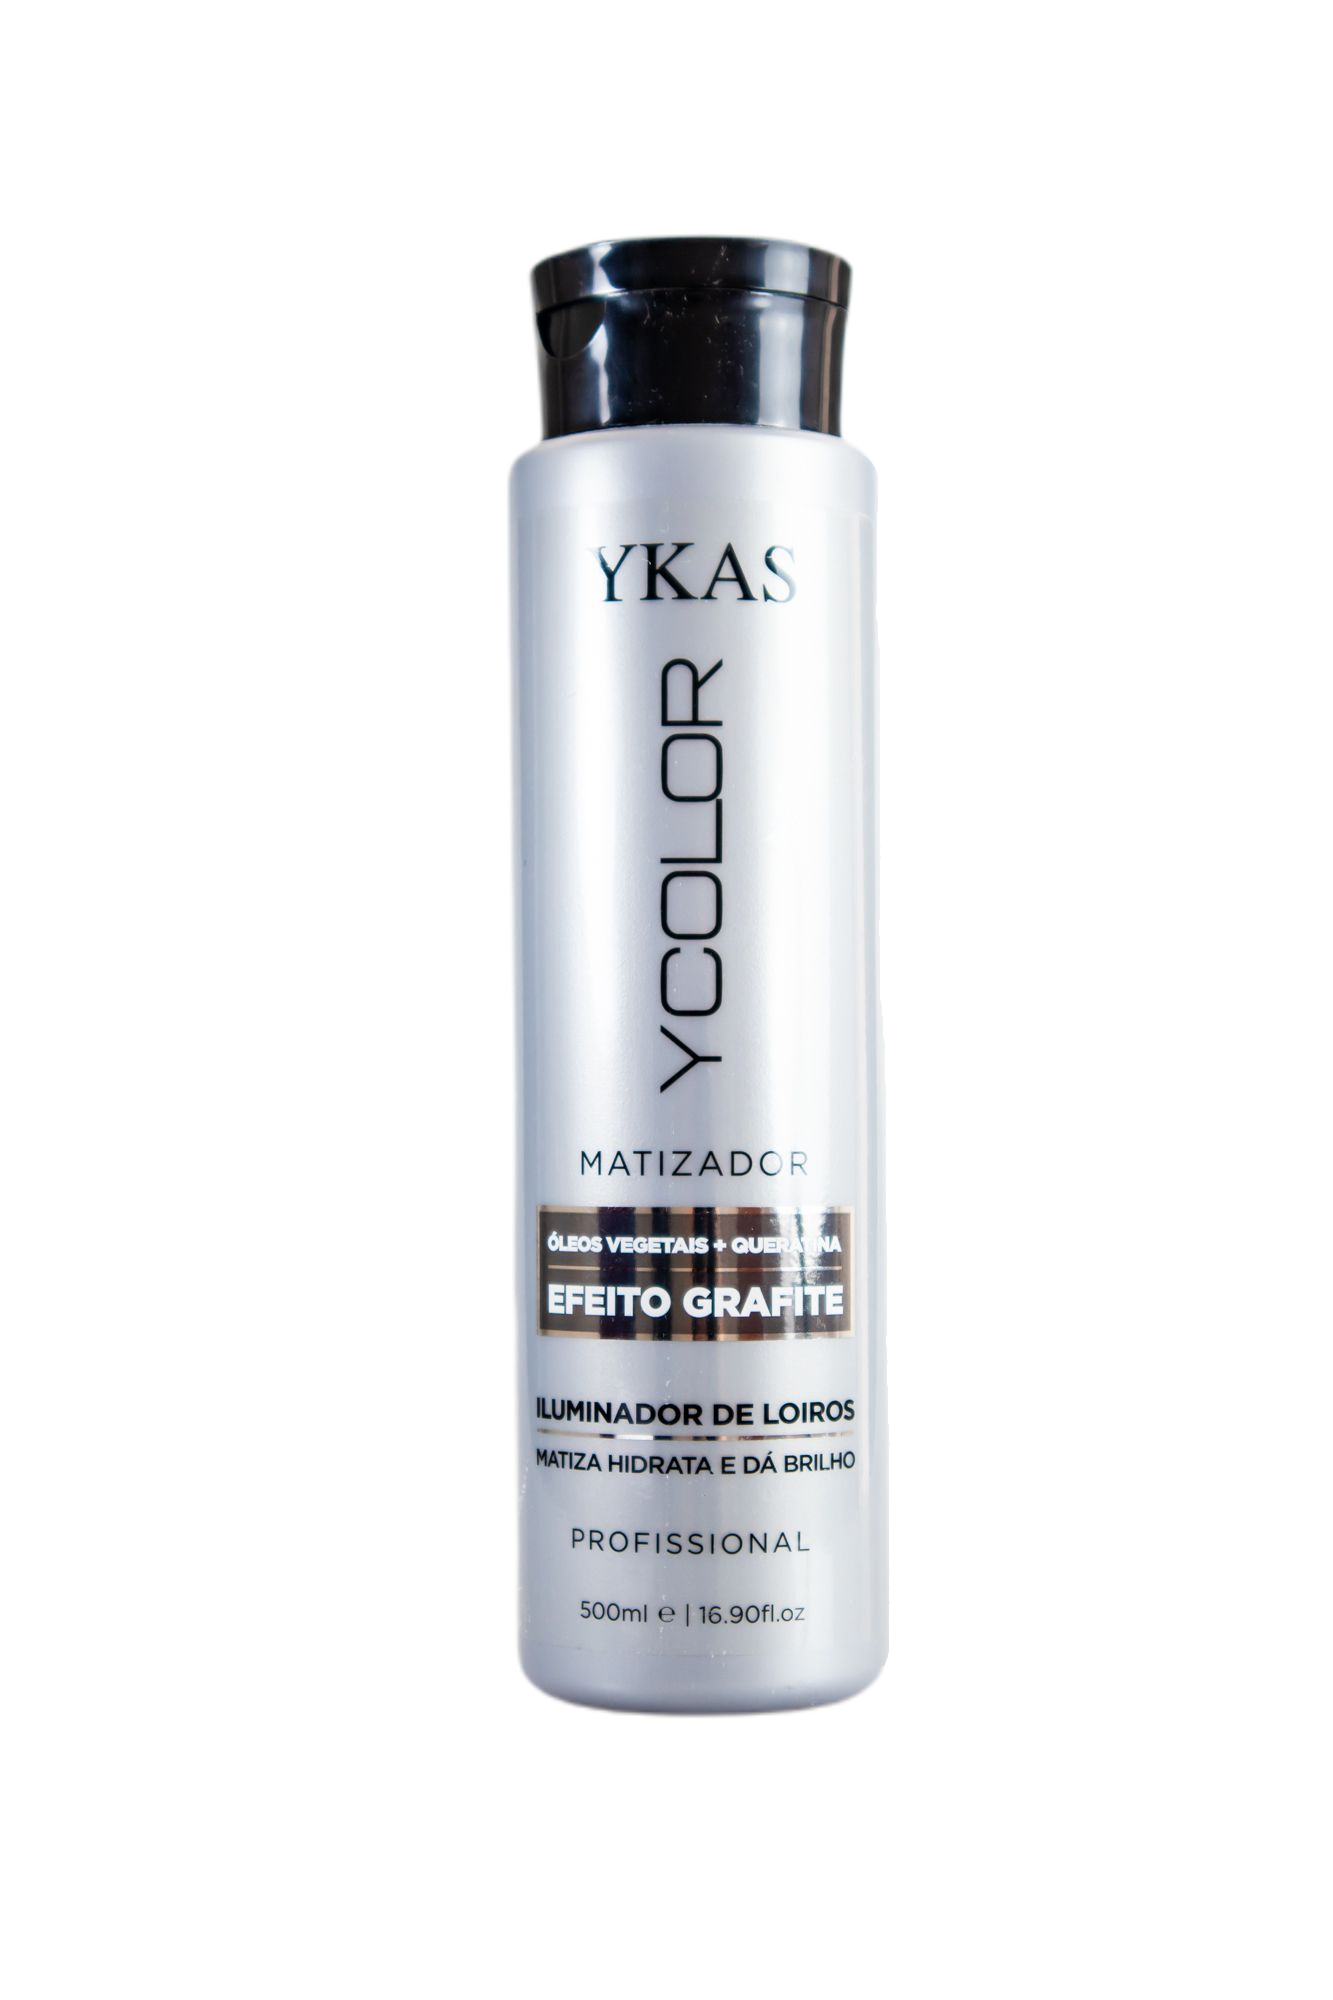 Ykas Brazilian Hair Treatment Ycolor Tinting Graphite Effect Illuminator Keratin Vegetable Oil 500ml - Ykas